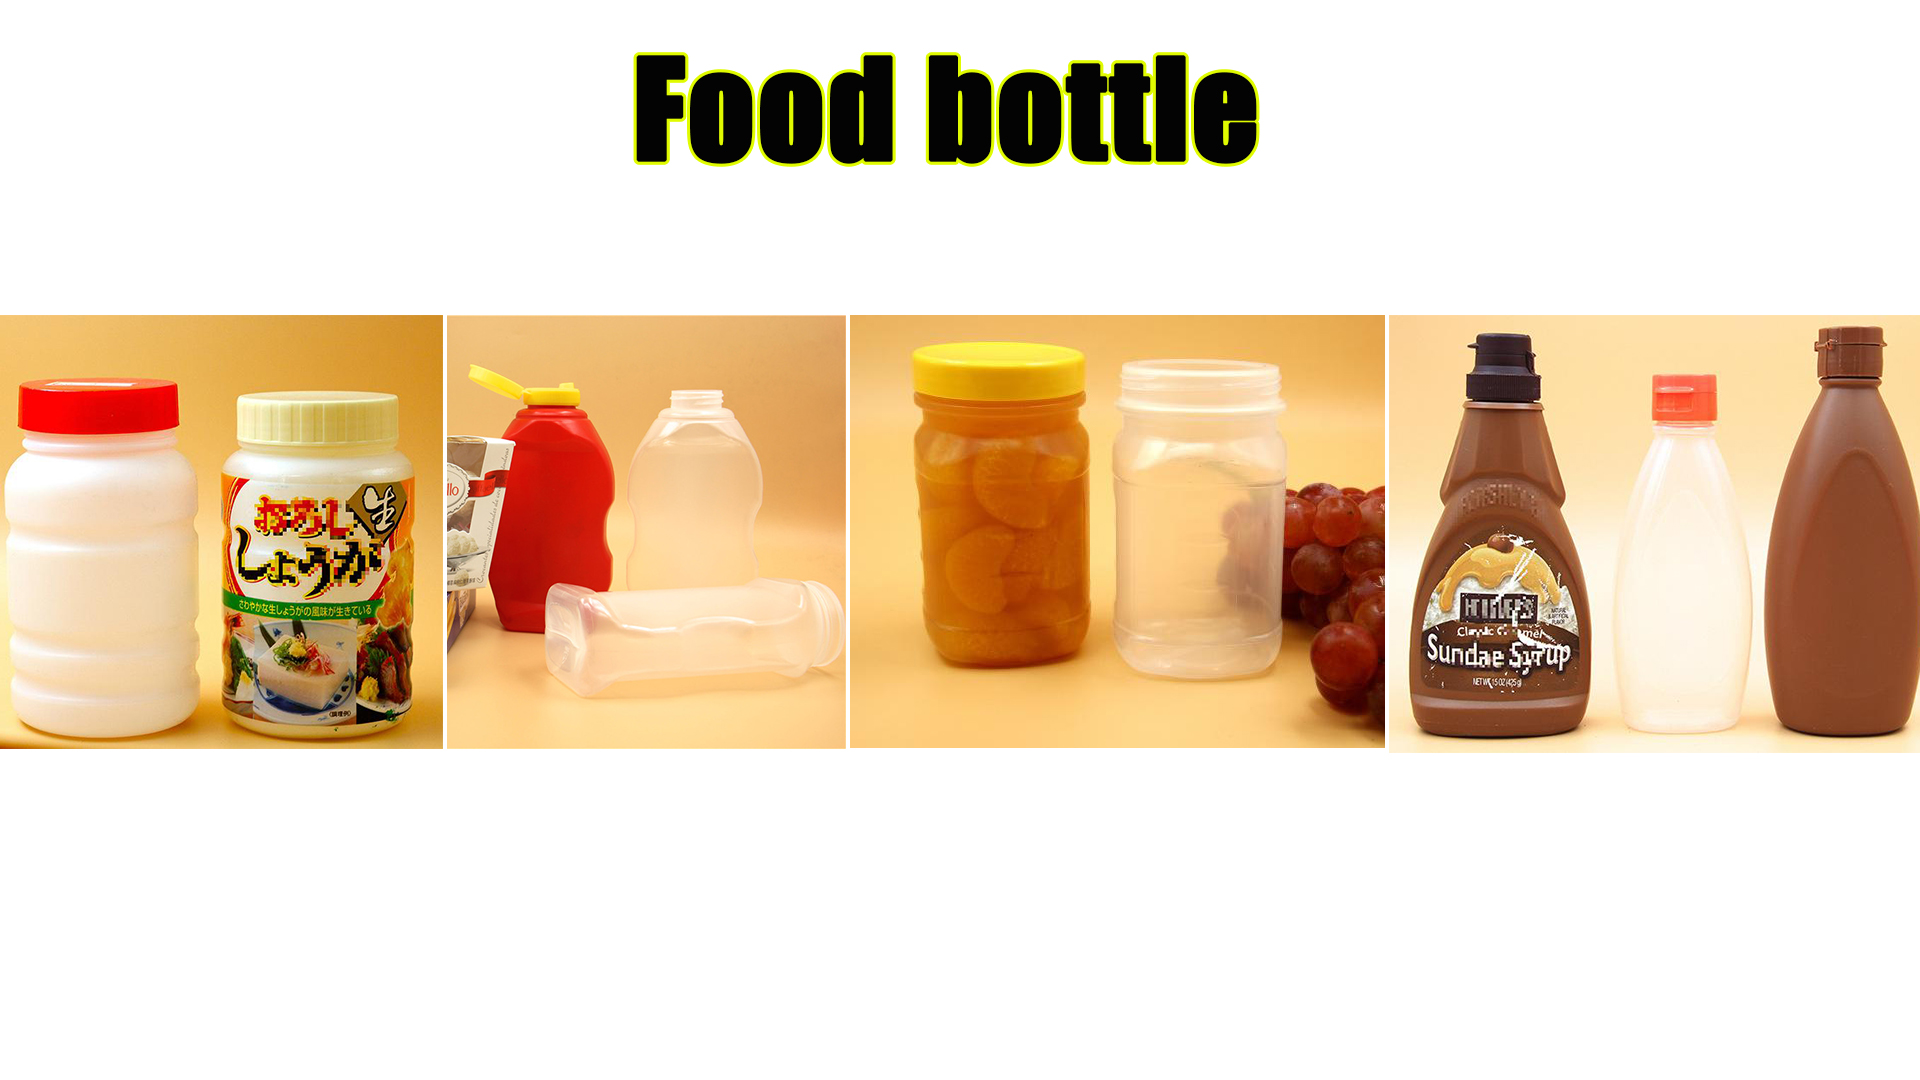 milk bottle,ketchup bottle